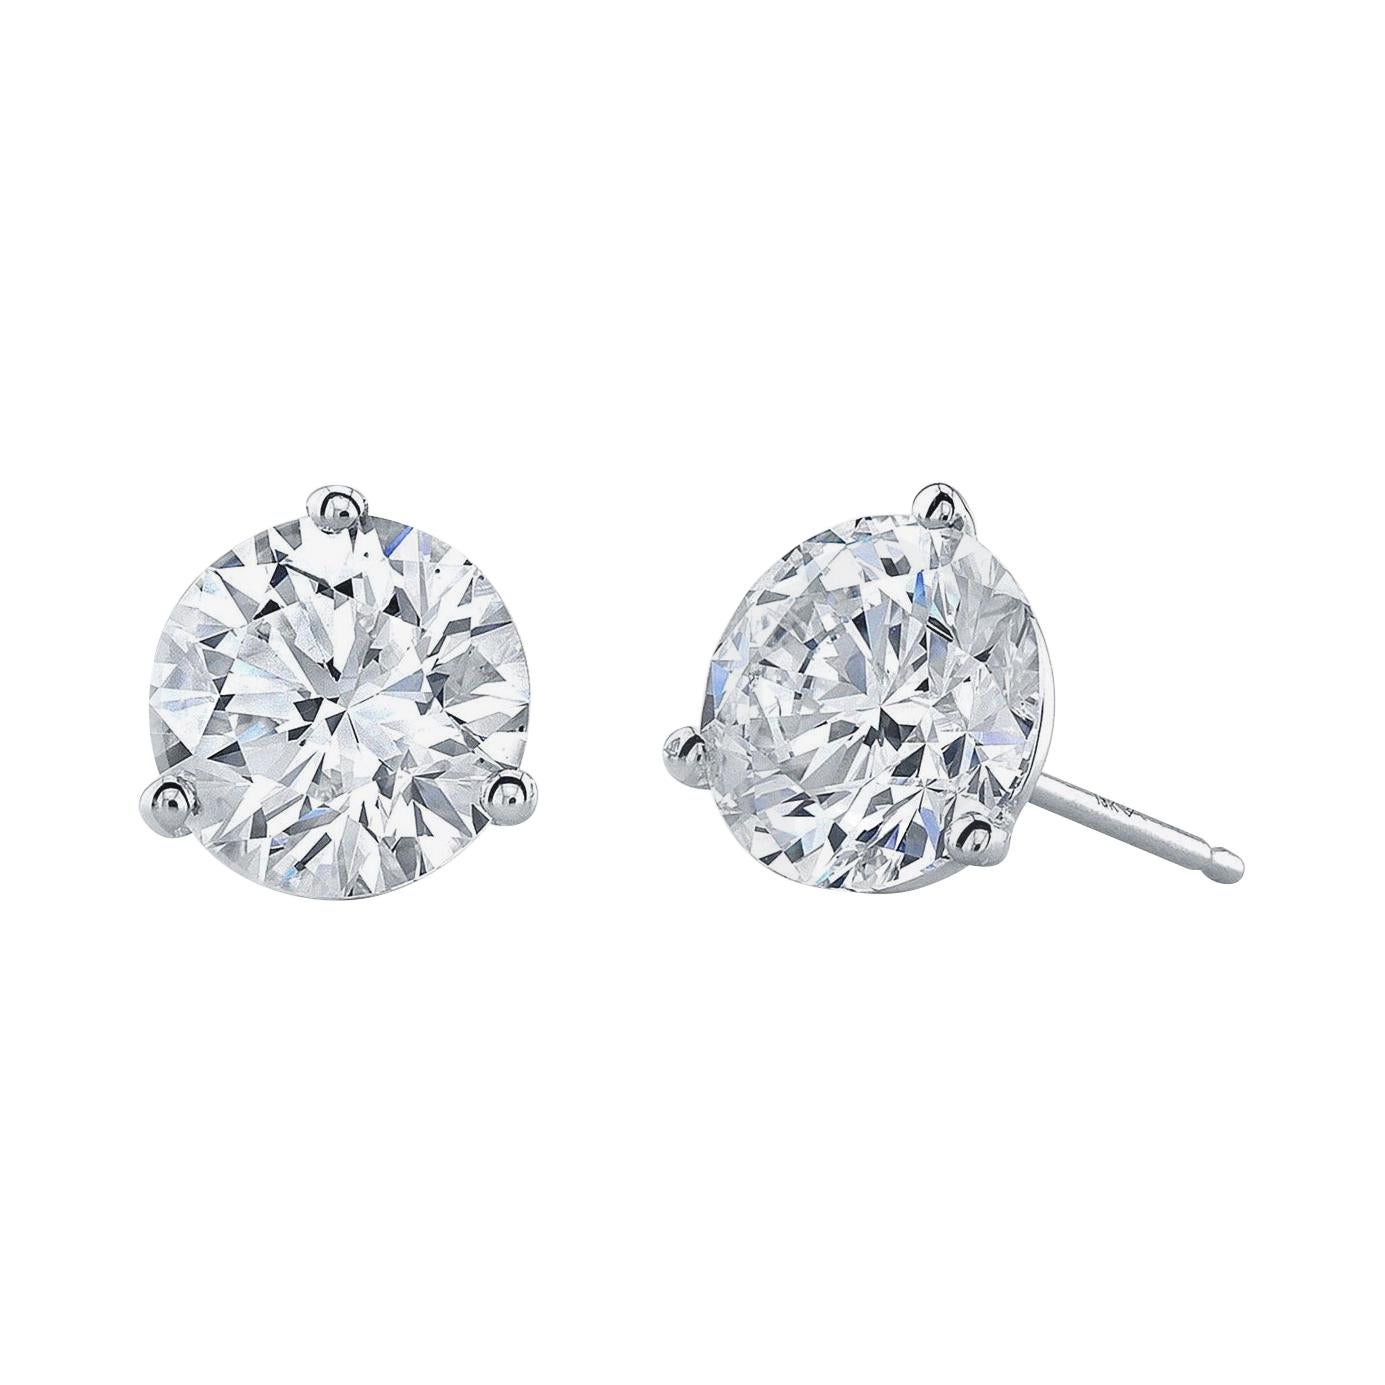 GIA Certified 6.03 Carat Diamond Stud Earrings